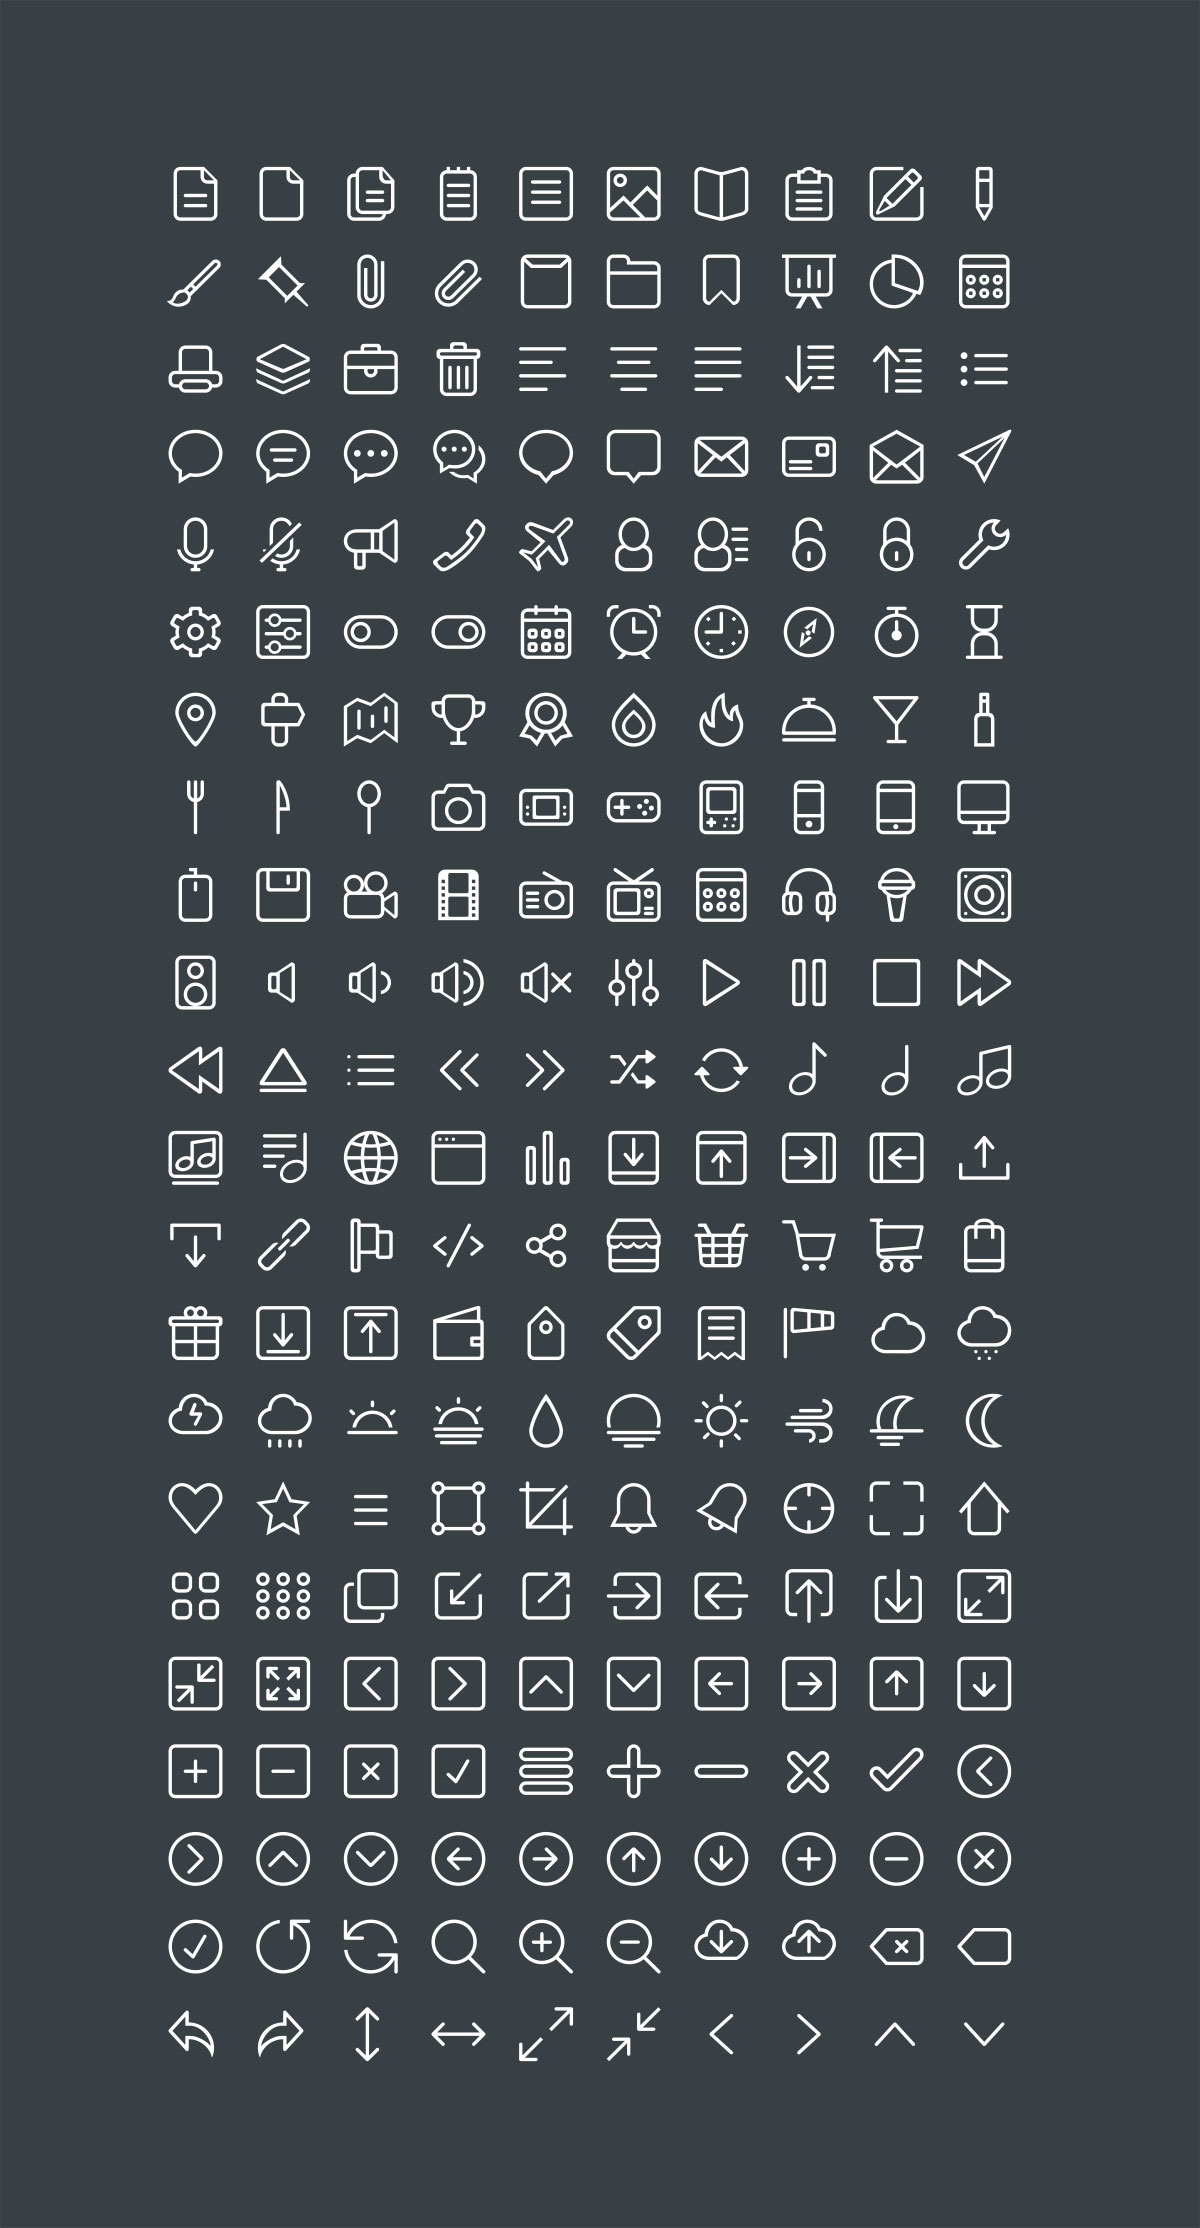 440 Free Icons